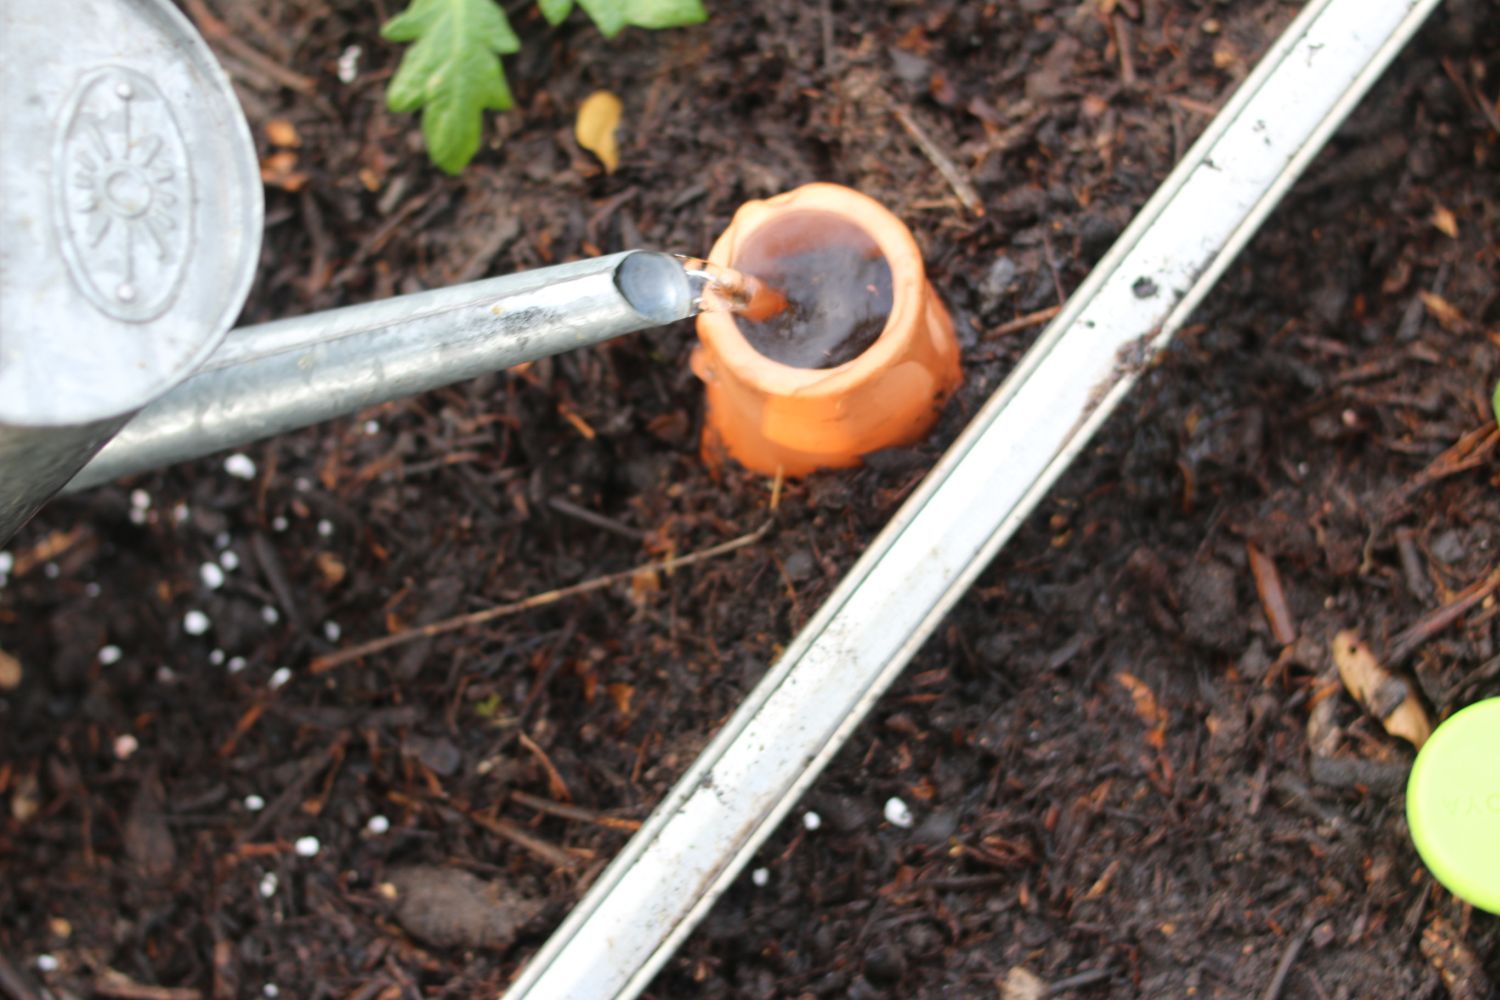 Clay Olla irrigation pot